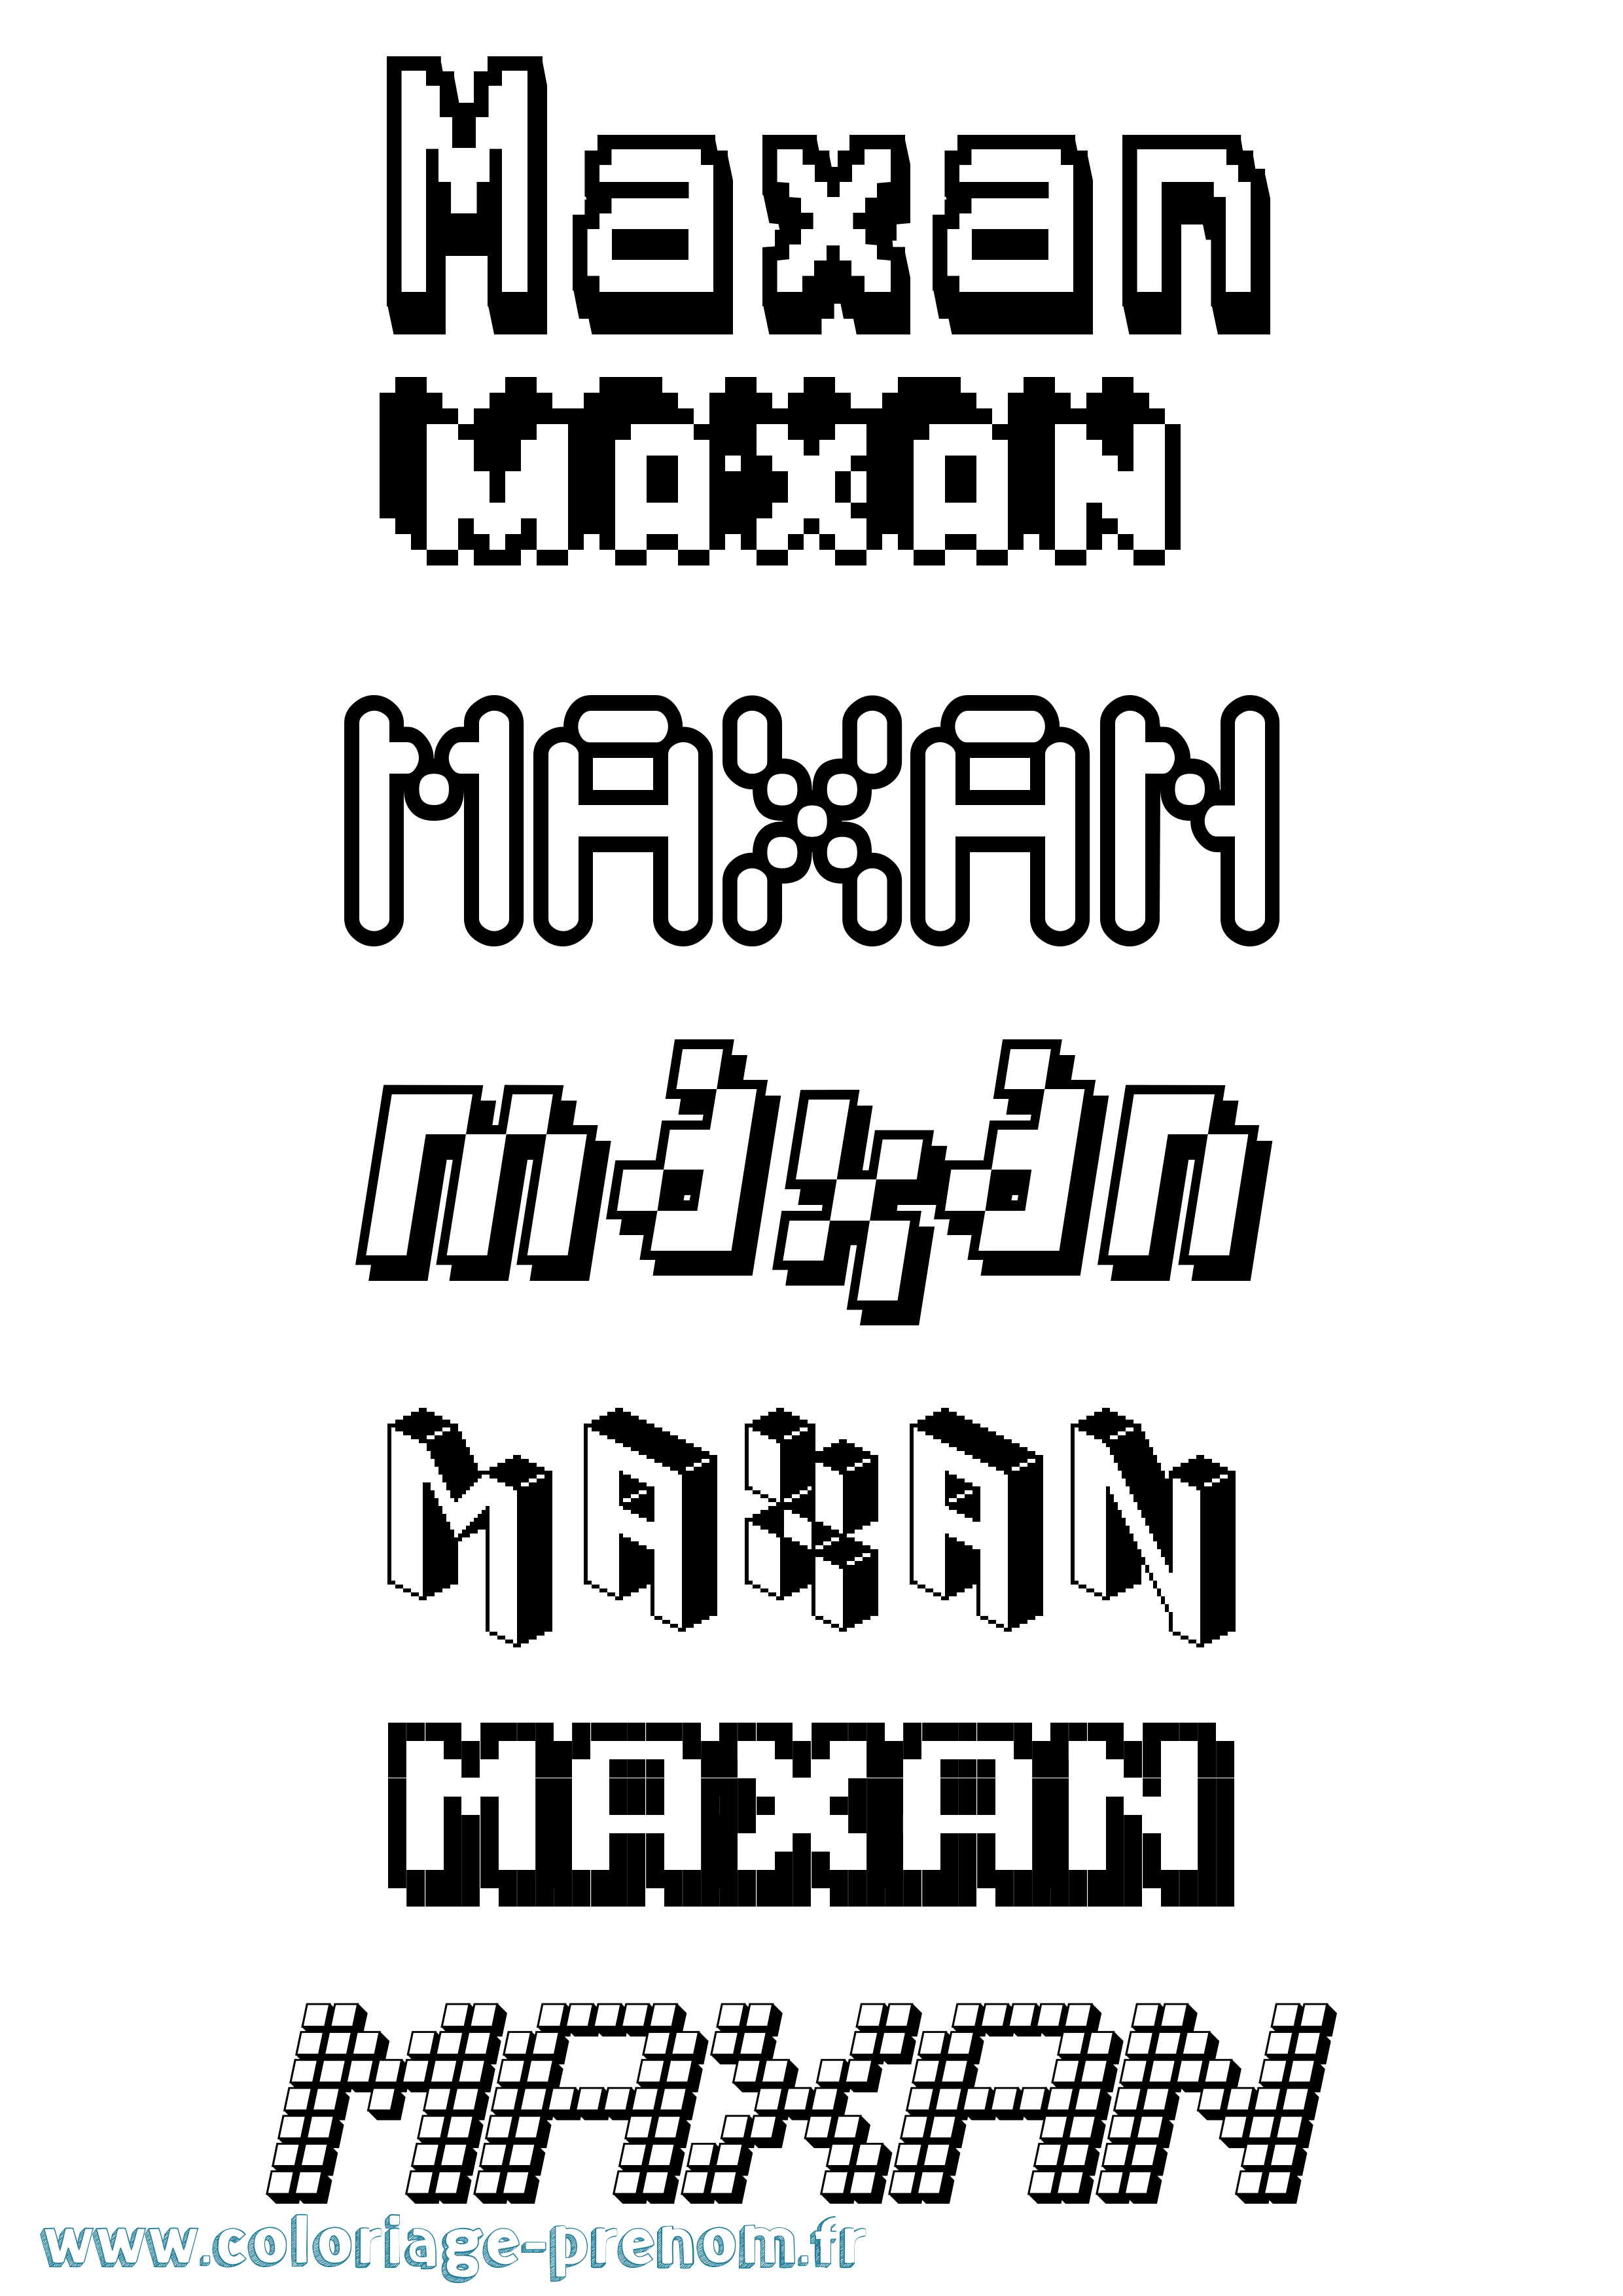 Coloriage prénom Maxan Pixel